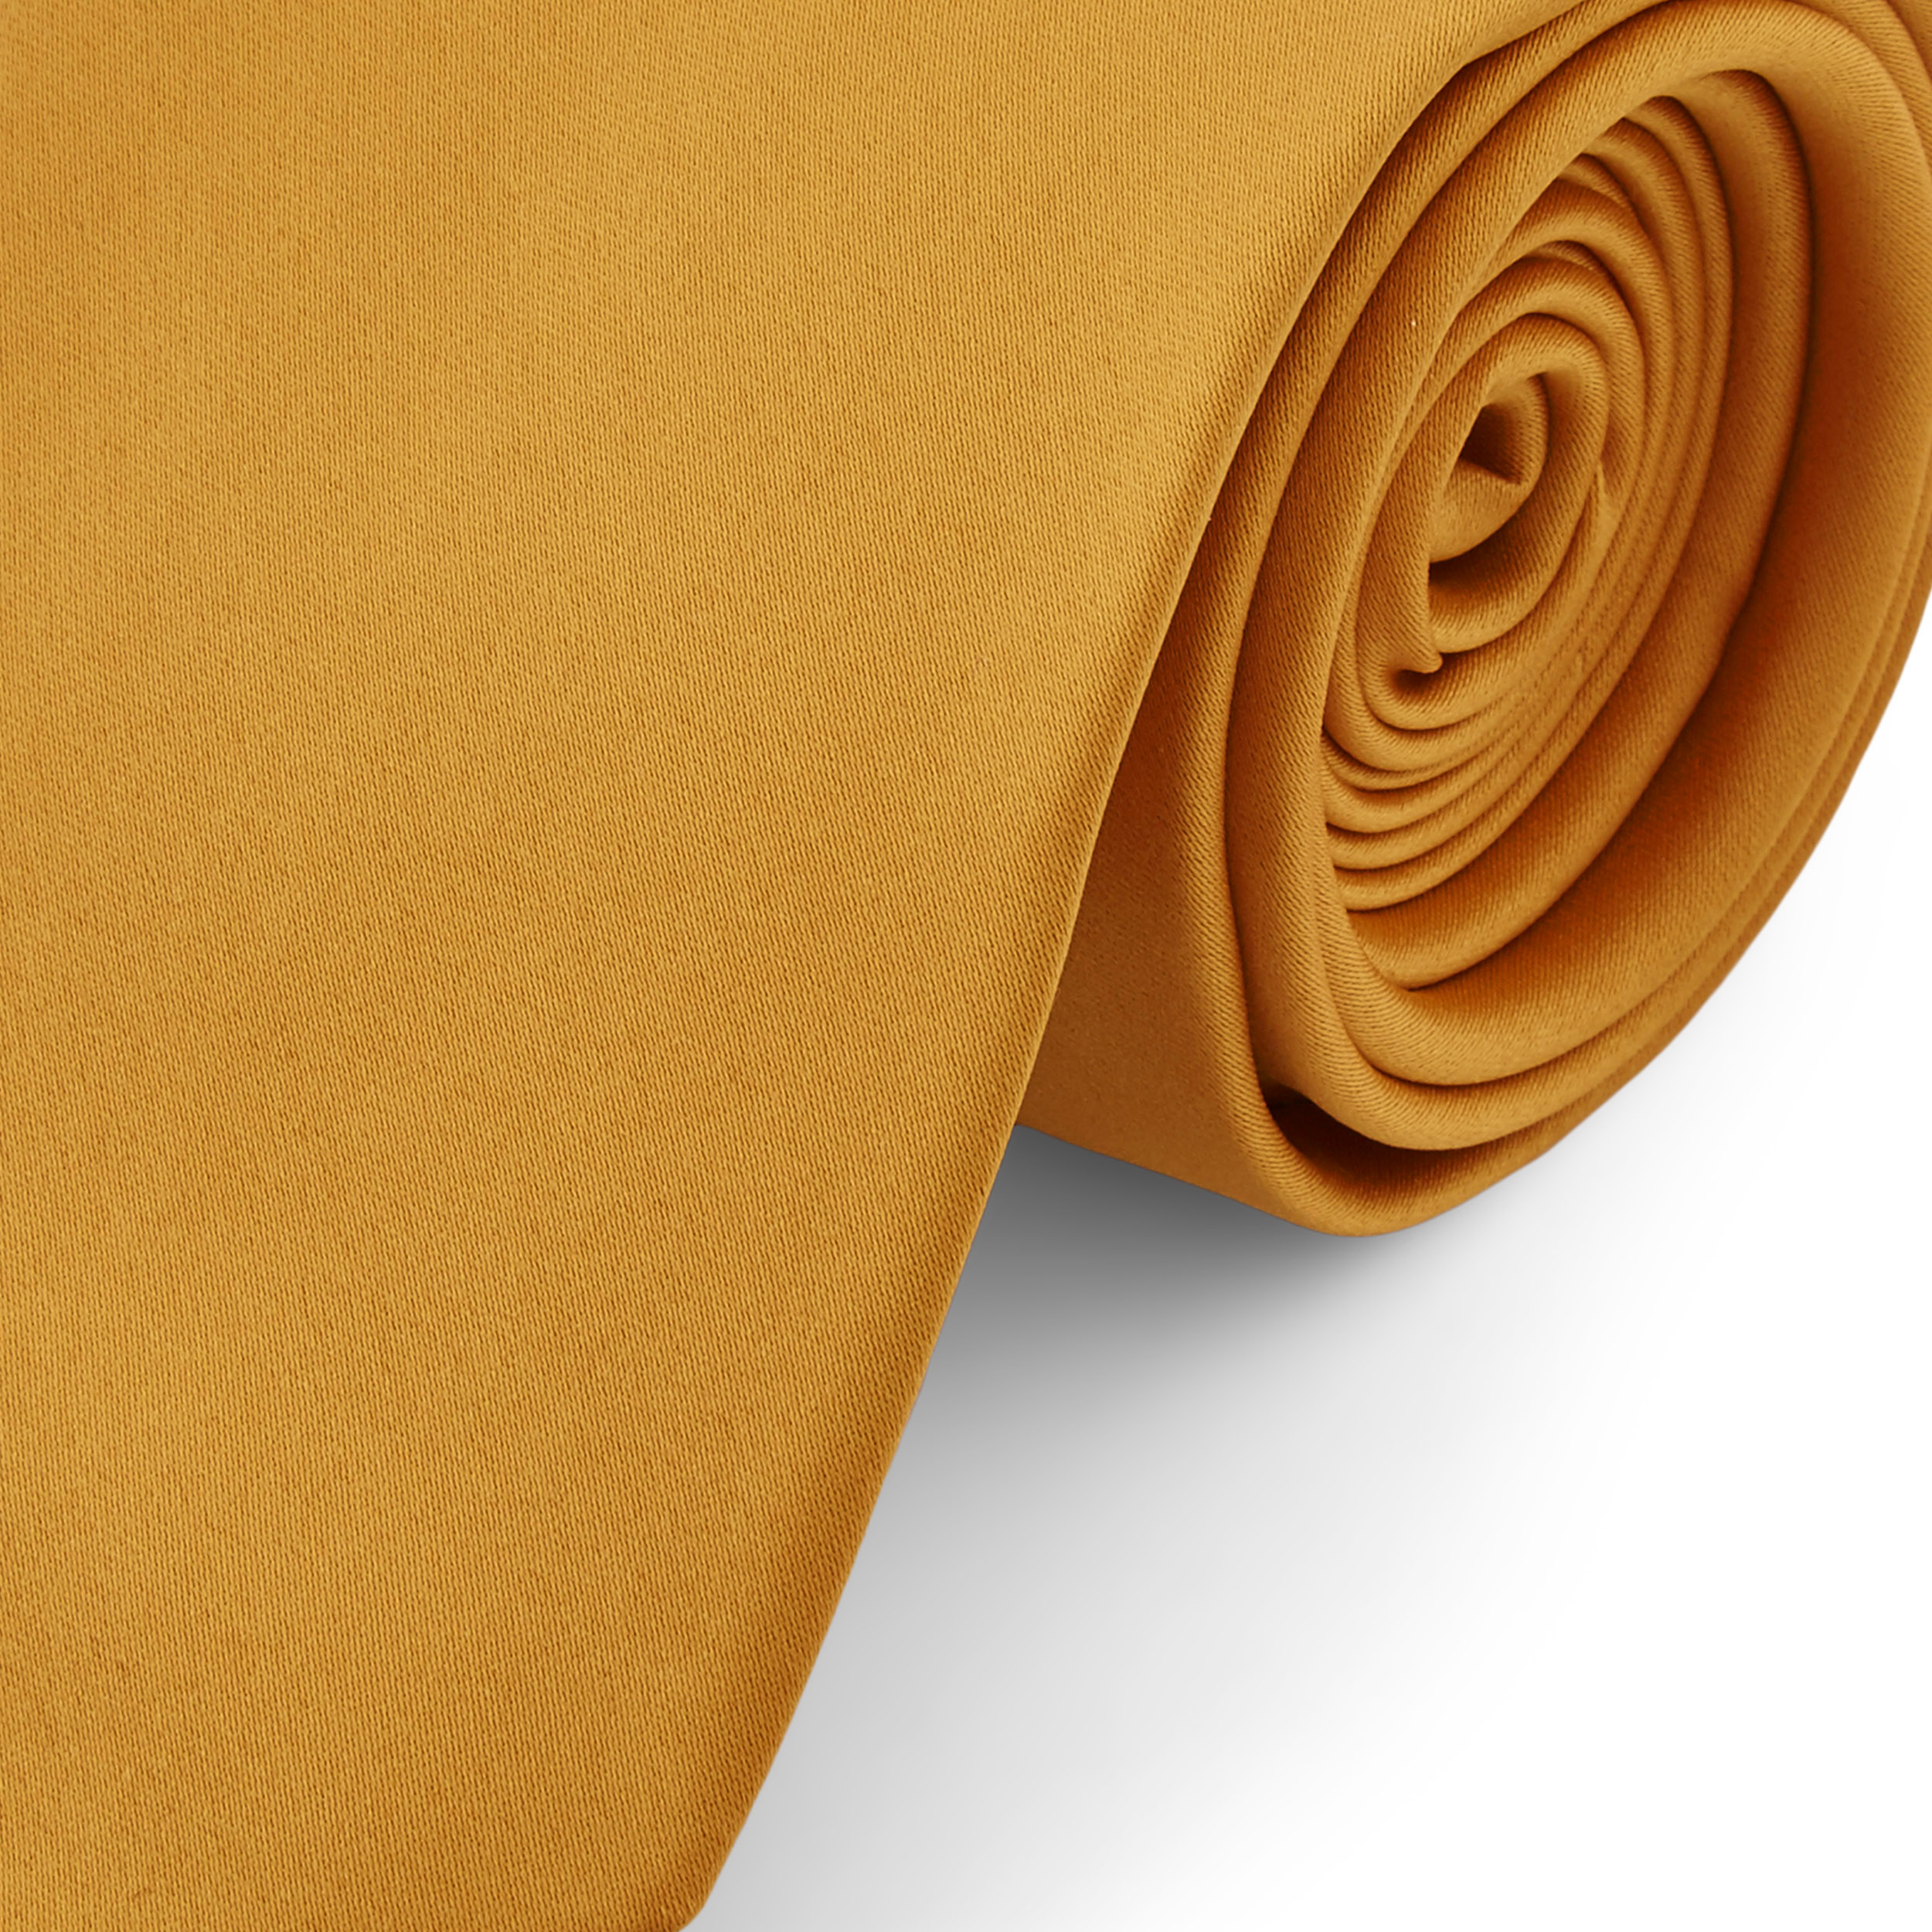 Basic Mustard Yellow Polyester Tie